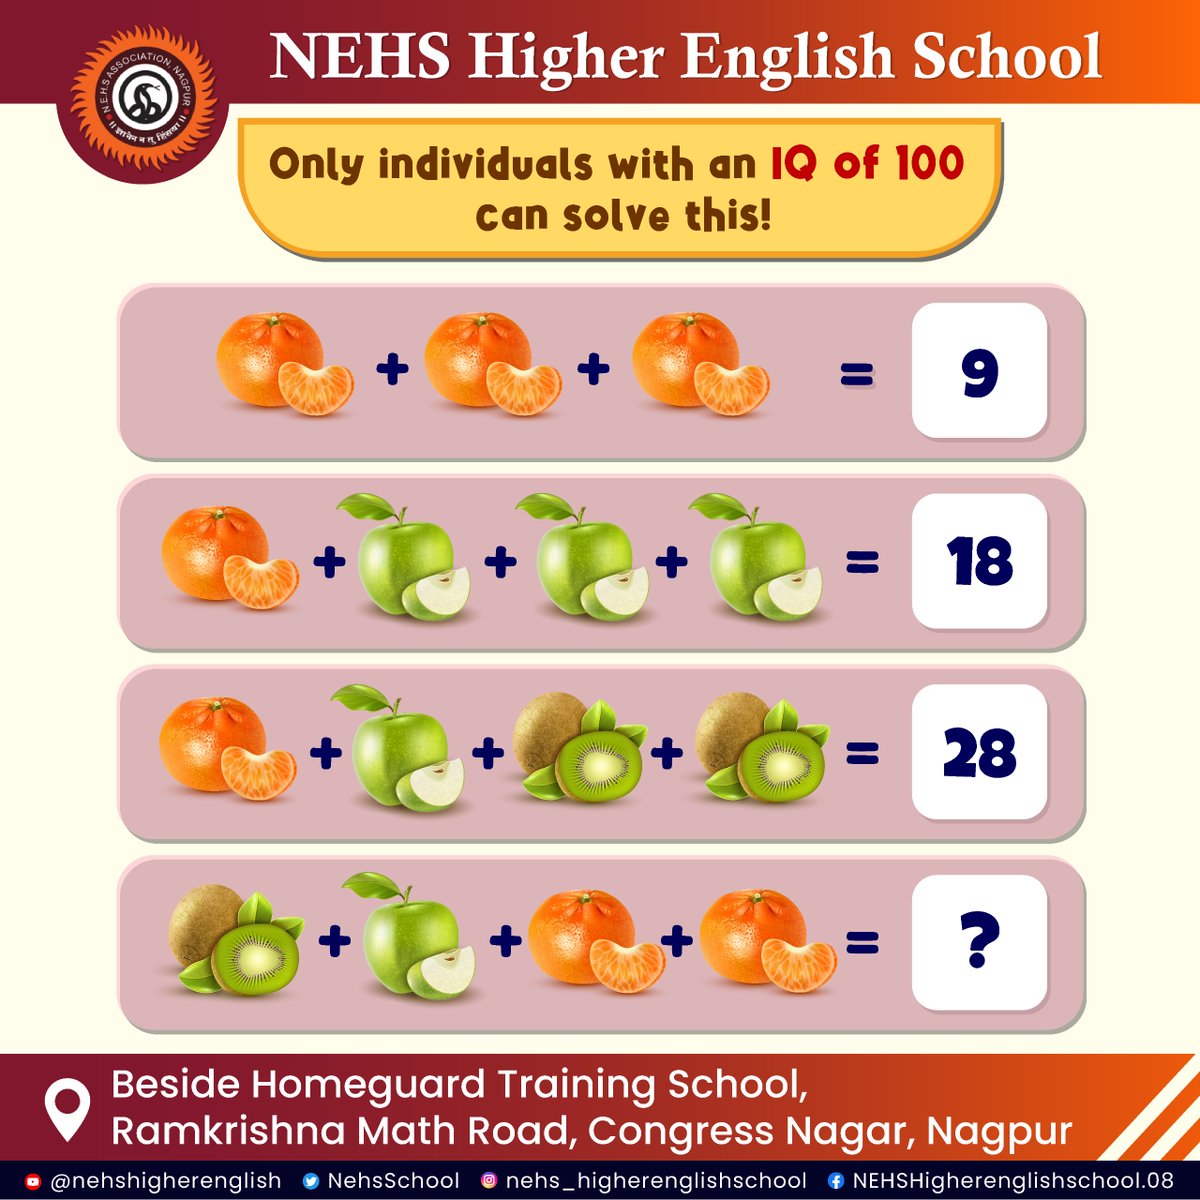 𝐂𝐎𝐌𝐌𝐄𝐍𝐓 𝐘𝐎𝐔𝐑 𝐀𝐍𝐒𝐖𝐄𝐑 𝐁𝐄𝐋𝐎𝐖 !!!👍

NEHS Higher English School, Nagpur
𝐀𝐃𝐌𝐈𝐒𝐒𝐈𝐎𝐍 𝐎𝐏𝐄𝐍!!

#quiz #QuizTime #QuizChallenge #intelligence #iqtest #challengers  #calculation #comment #comments  #share #like #nagpur #mumbai #pune #maharashtraday